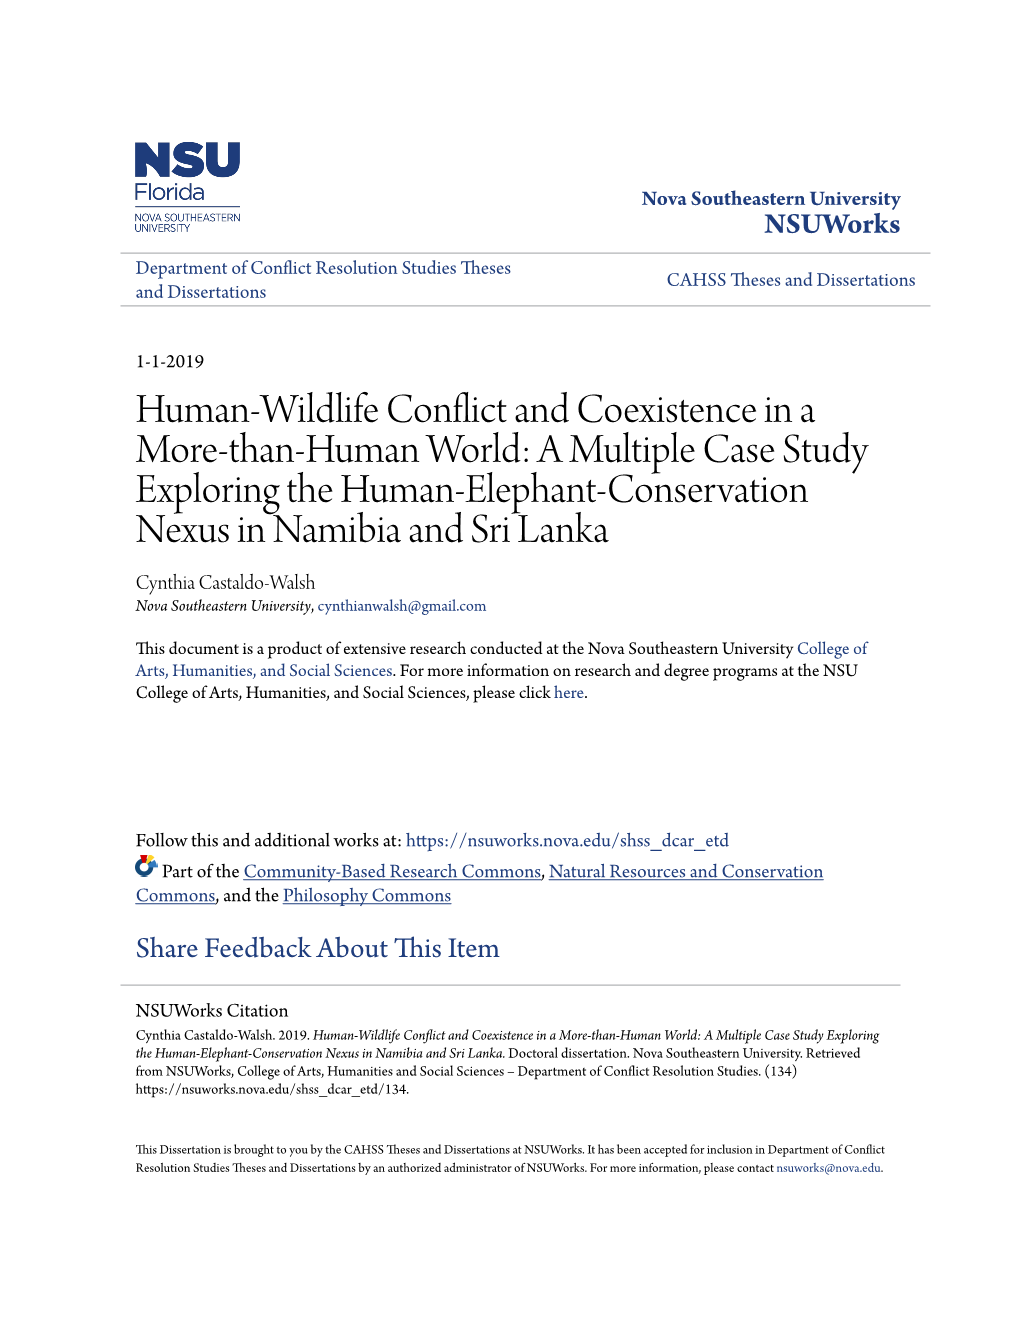 A Multiple Case Study Exploring the Human-Elephant-Conservat